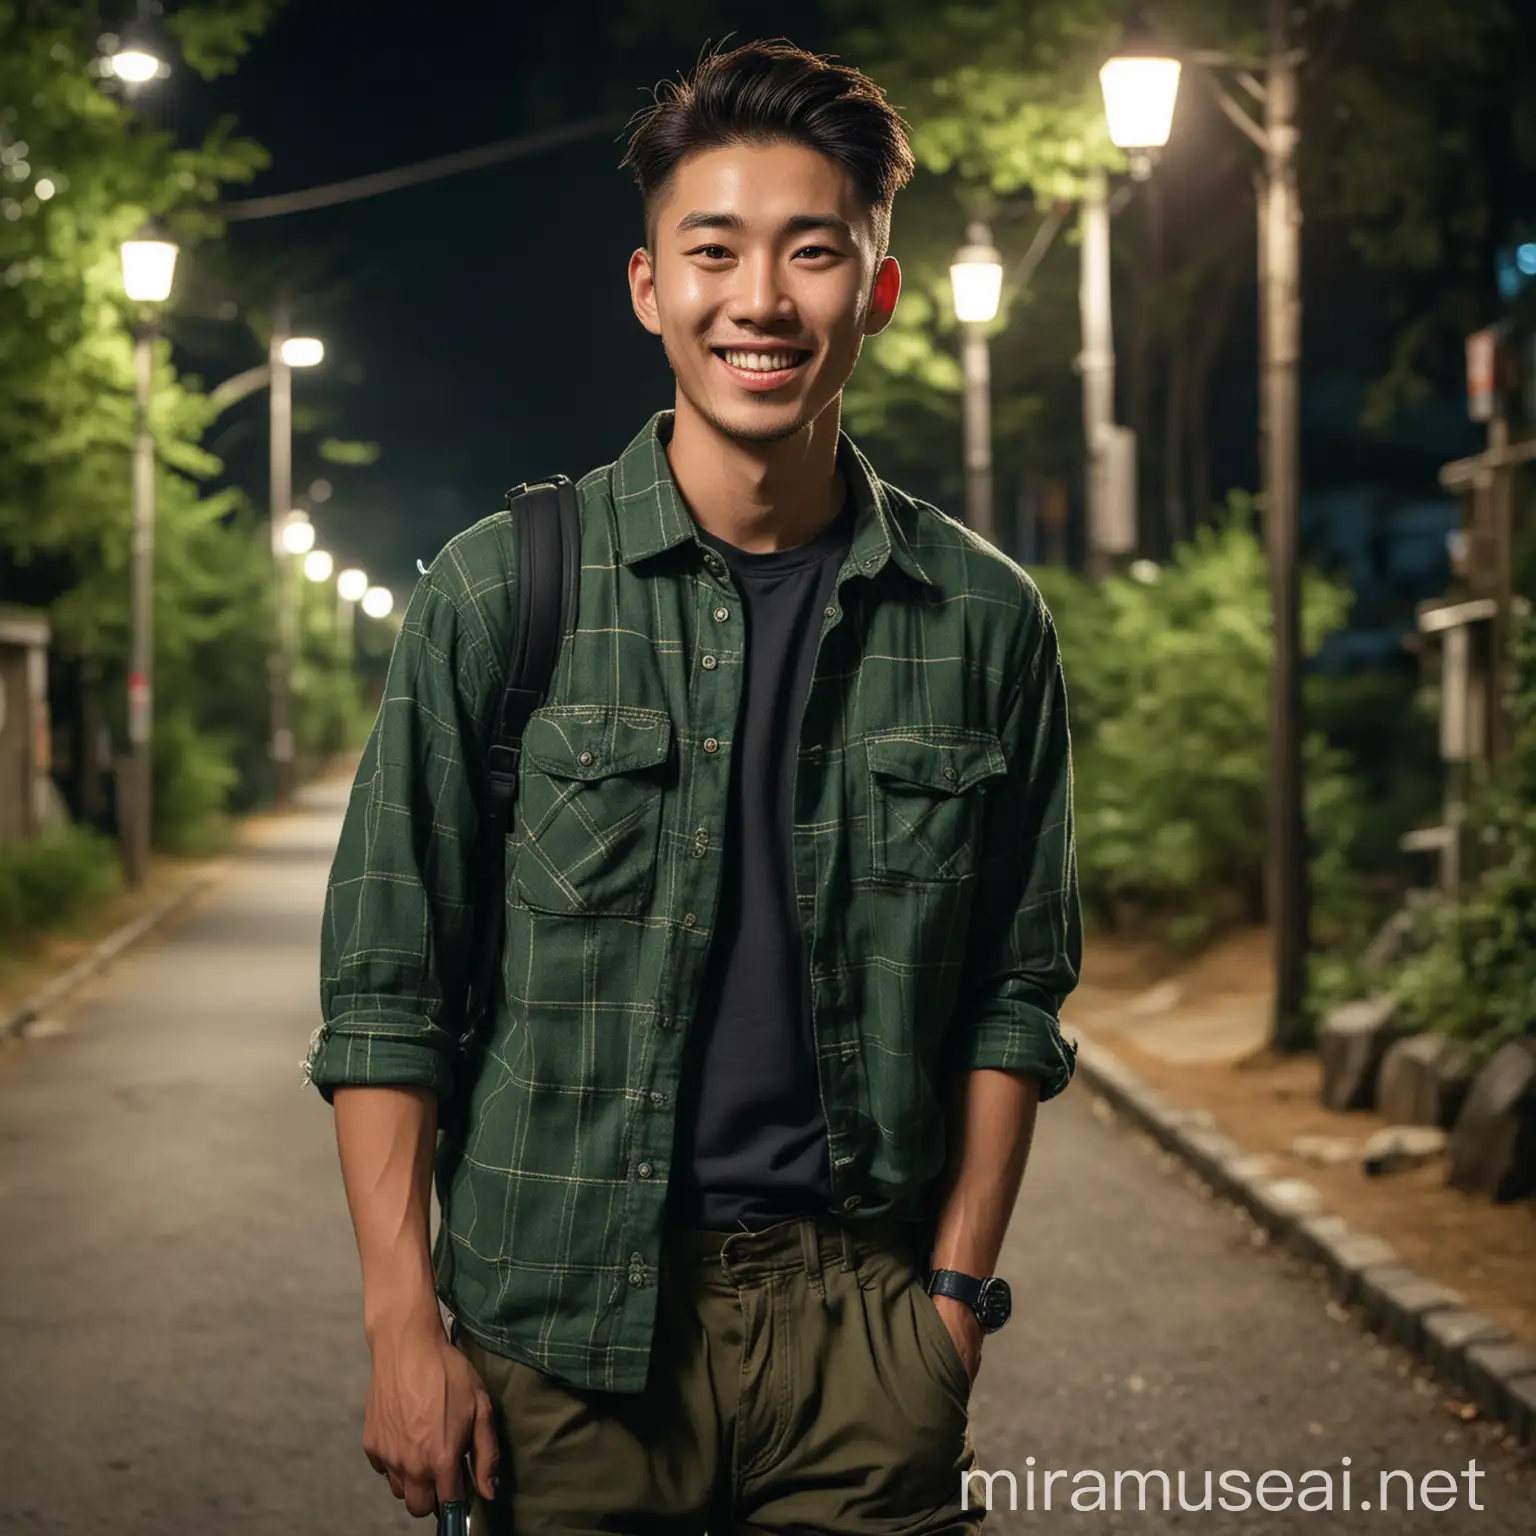 Handsome Korean Man Smiling on Hiking Trail in Japanese Village at Night